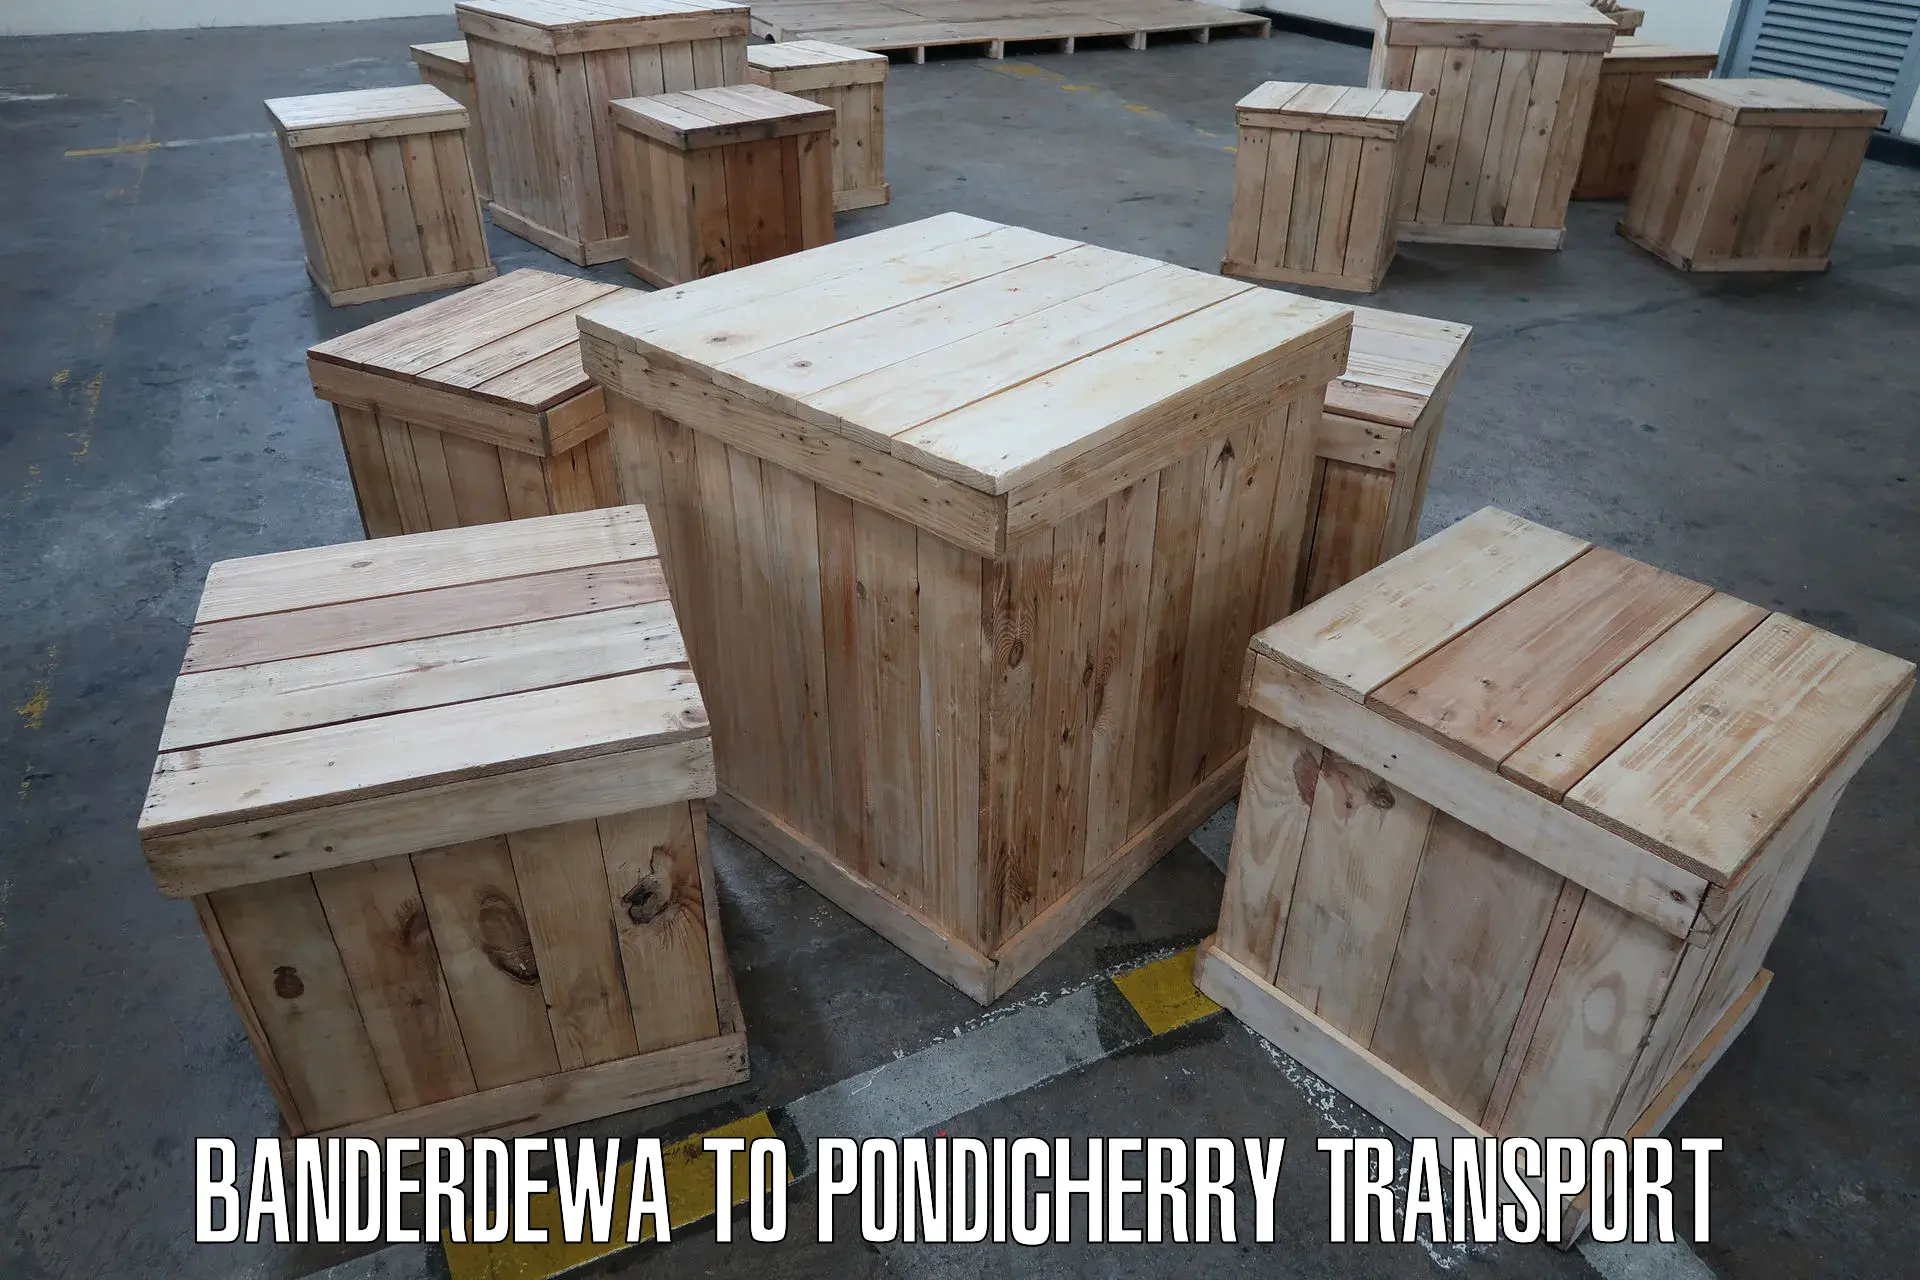 Furniture transport service Banderdewa to Pondicherry University